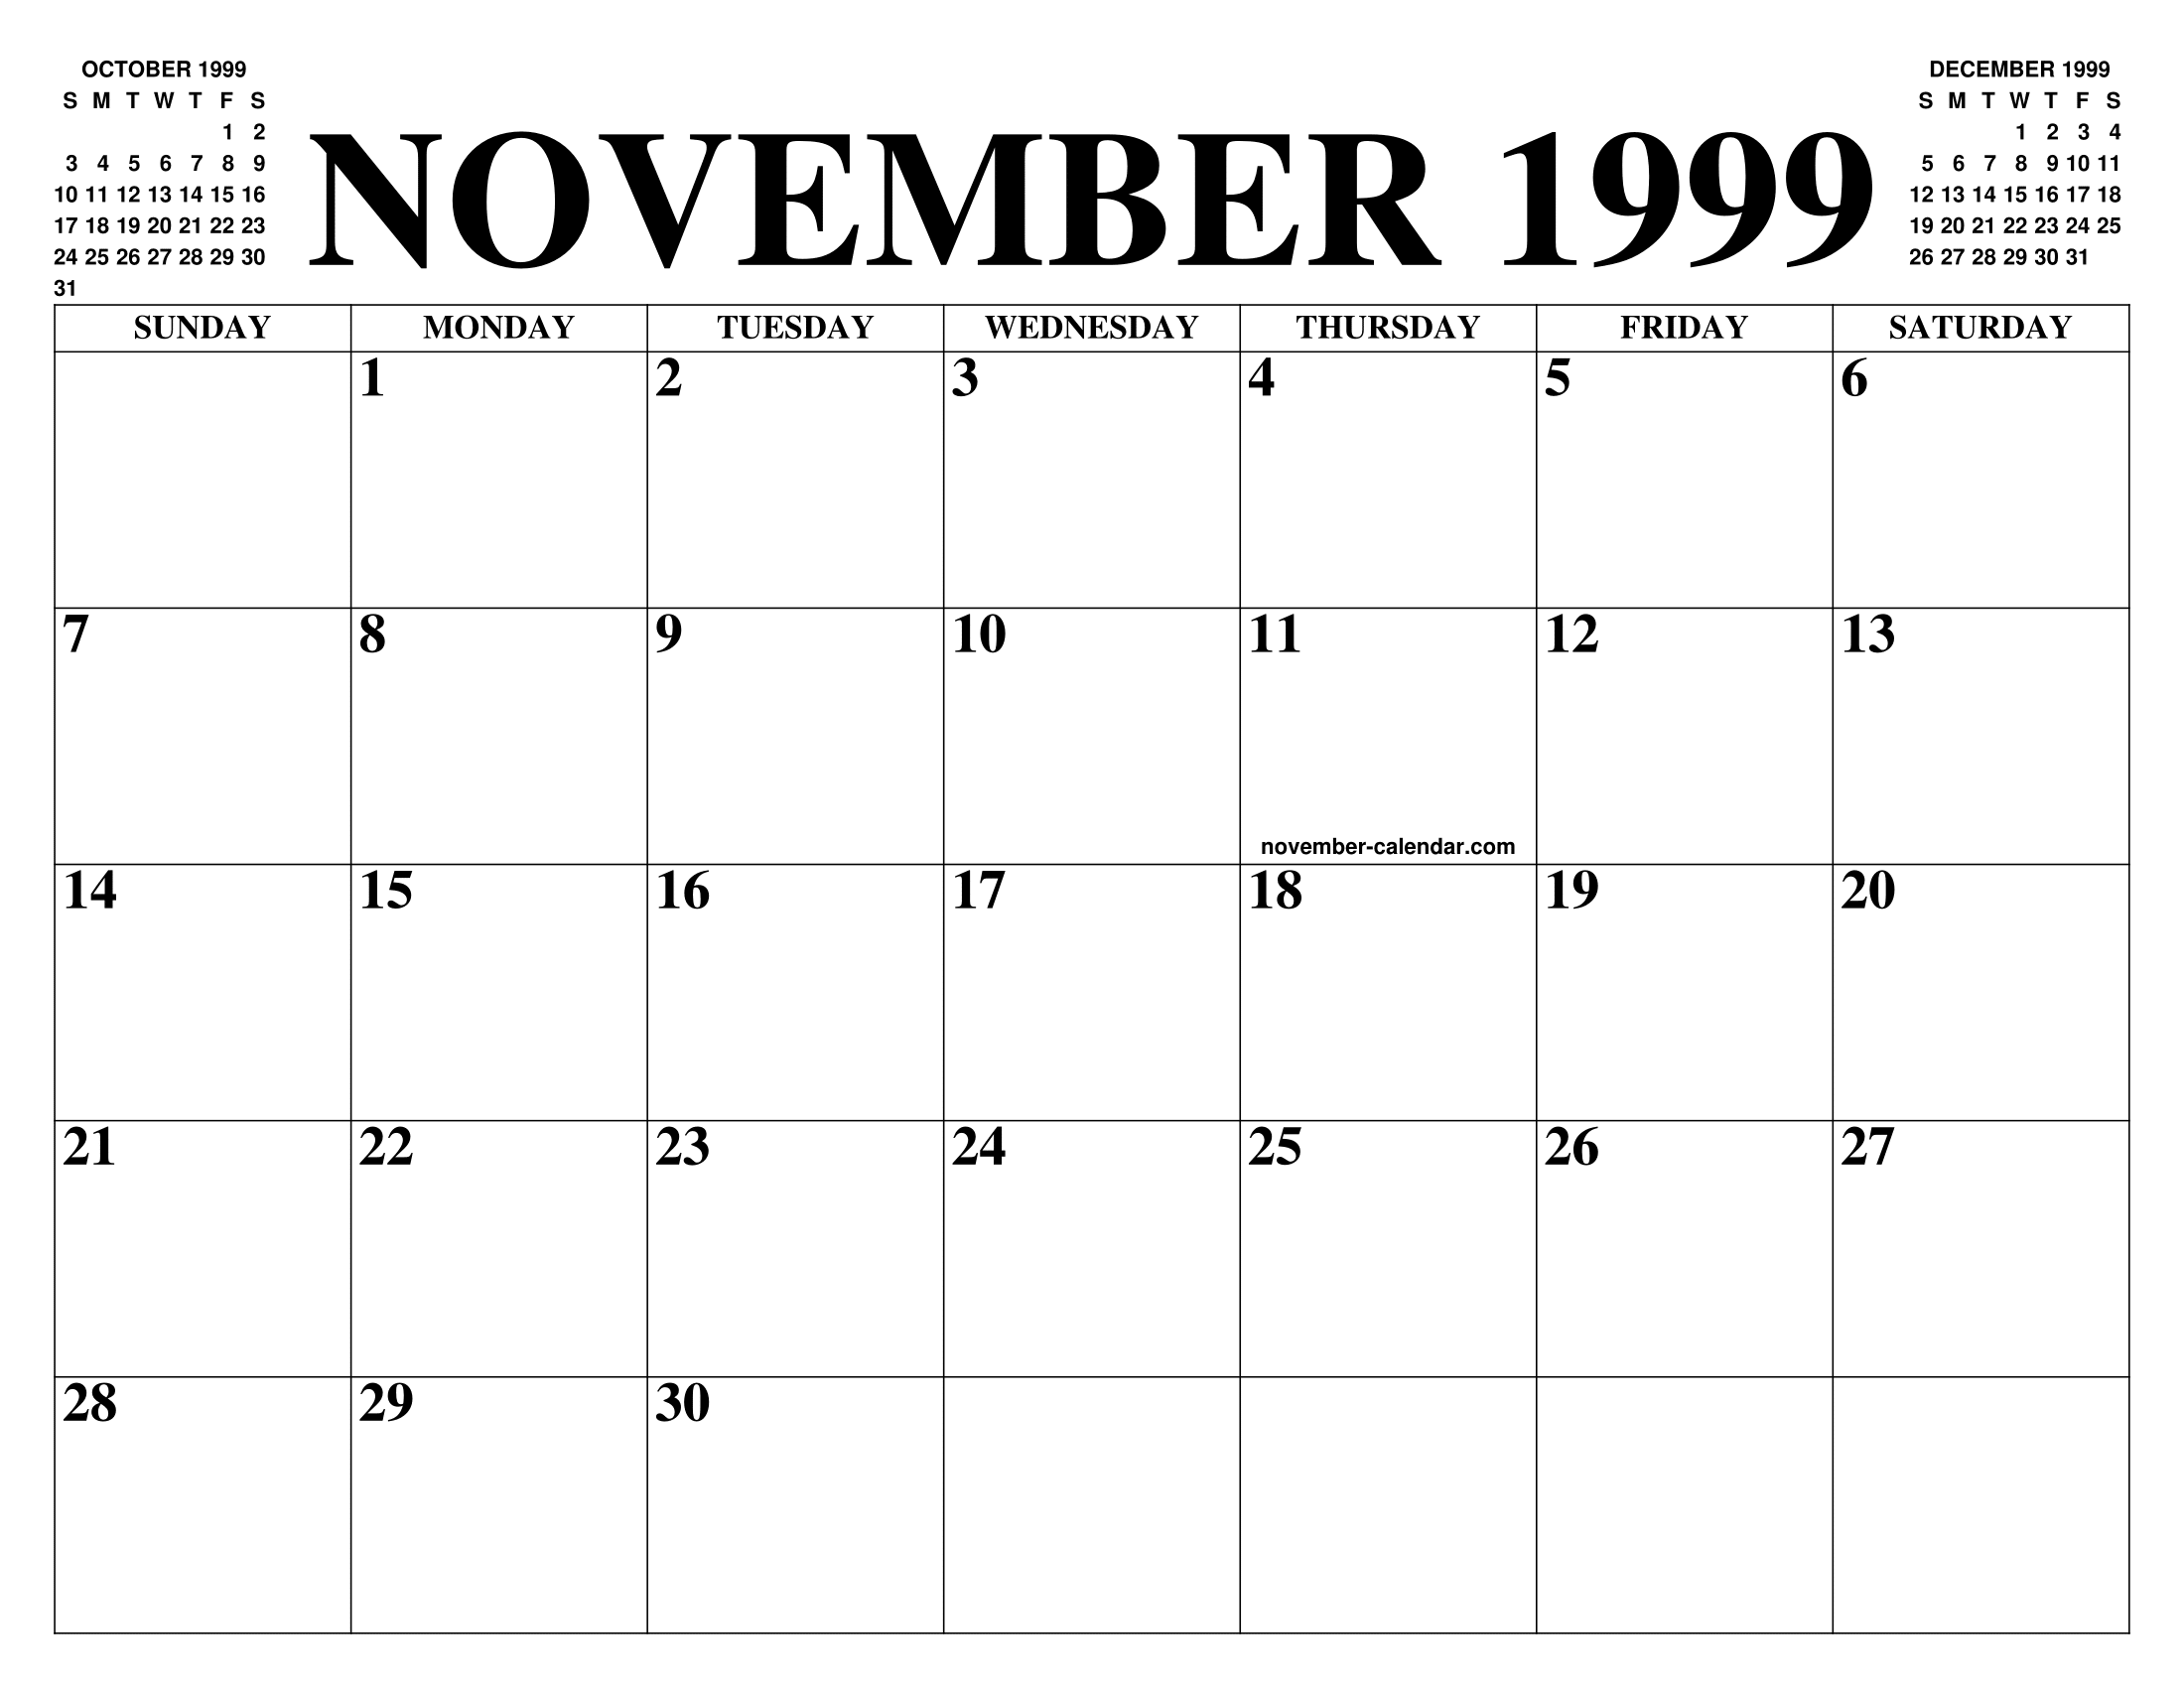 NOVEMBER 1999 CALENDAR OF THE MONTH: FREE PRINTABLE NOVEMBER CALENDAR